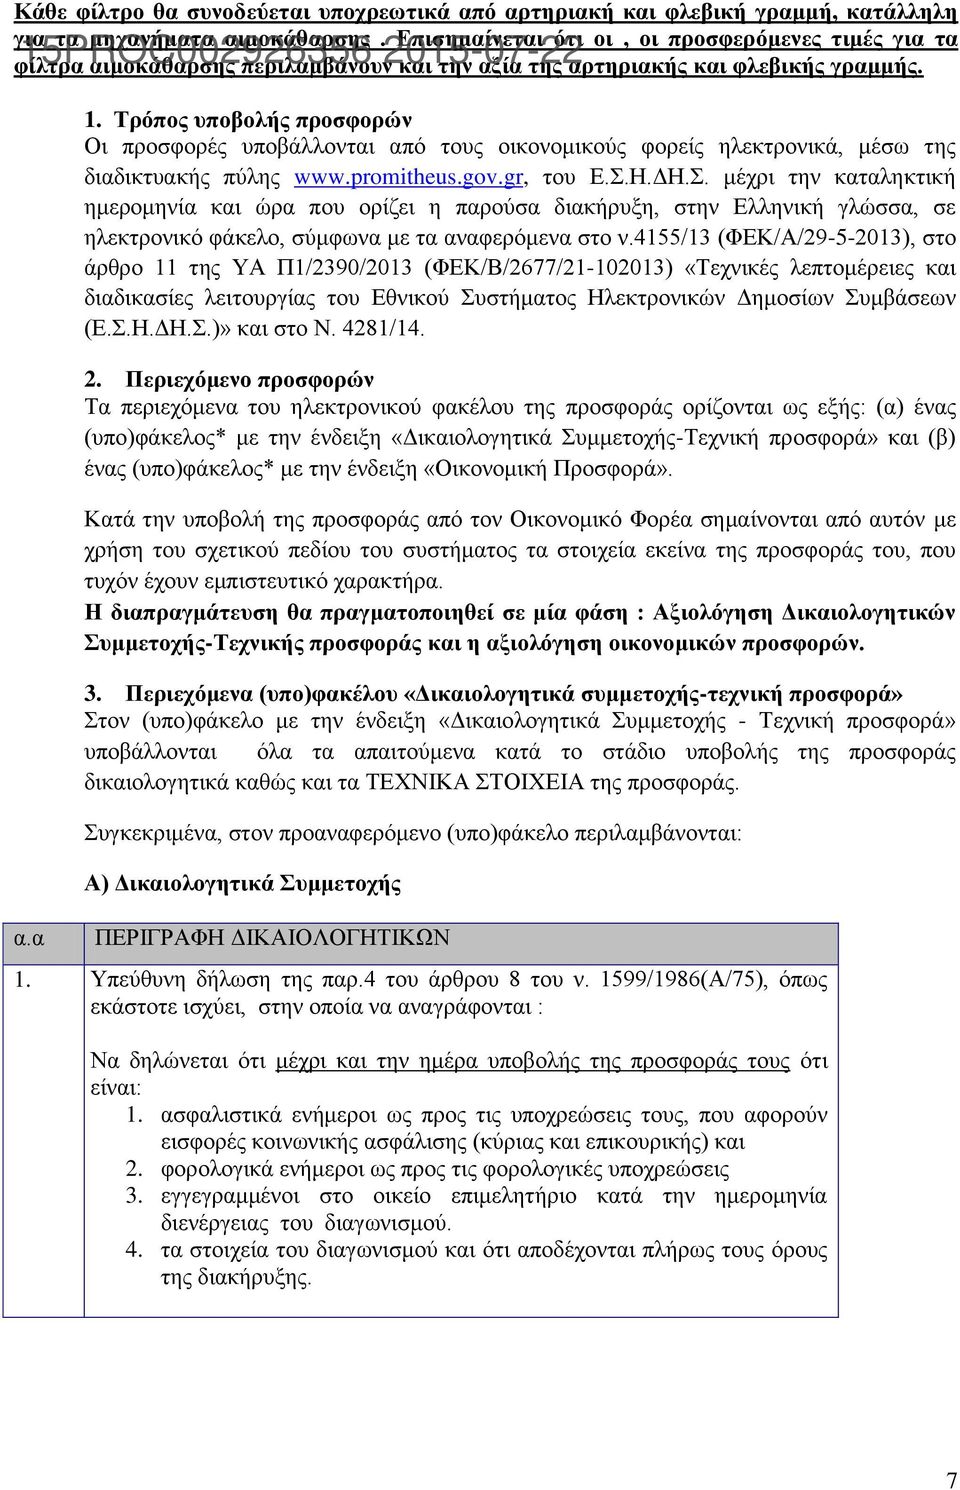 promitheus.gov.gr, του Ε.Σ.Η.ΔΗ.Σ. μέχρι την καταληκτική ημερομηνία και ώρα που ορίζει η παρούσα διακήρυξη, στην Ελληνική γλώσσα, σε ηλεκτρονικό φάκελο, σύμφωνα με τα αναφερόμενα στο ν.